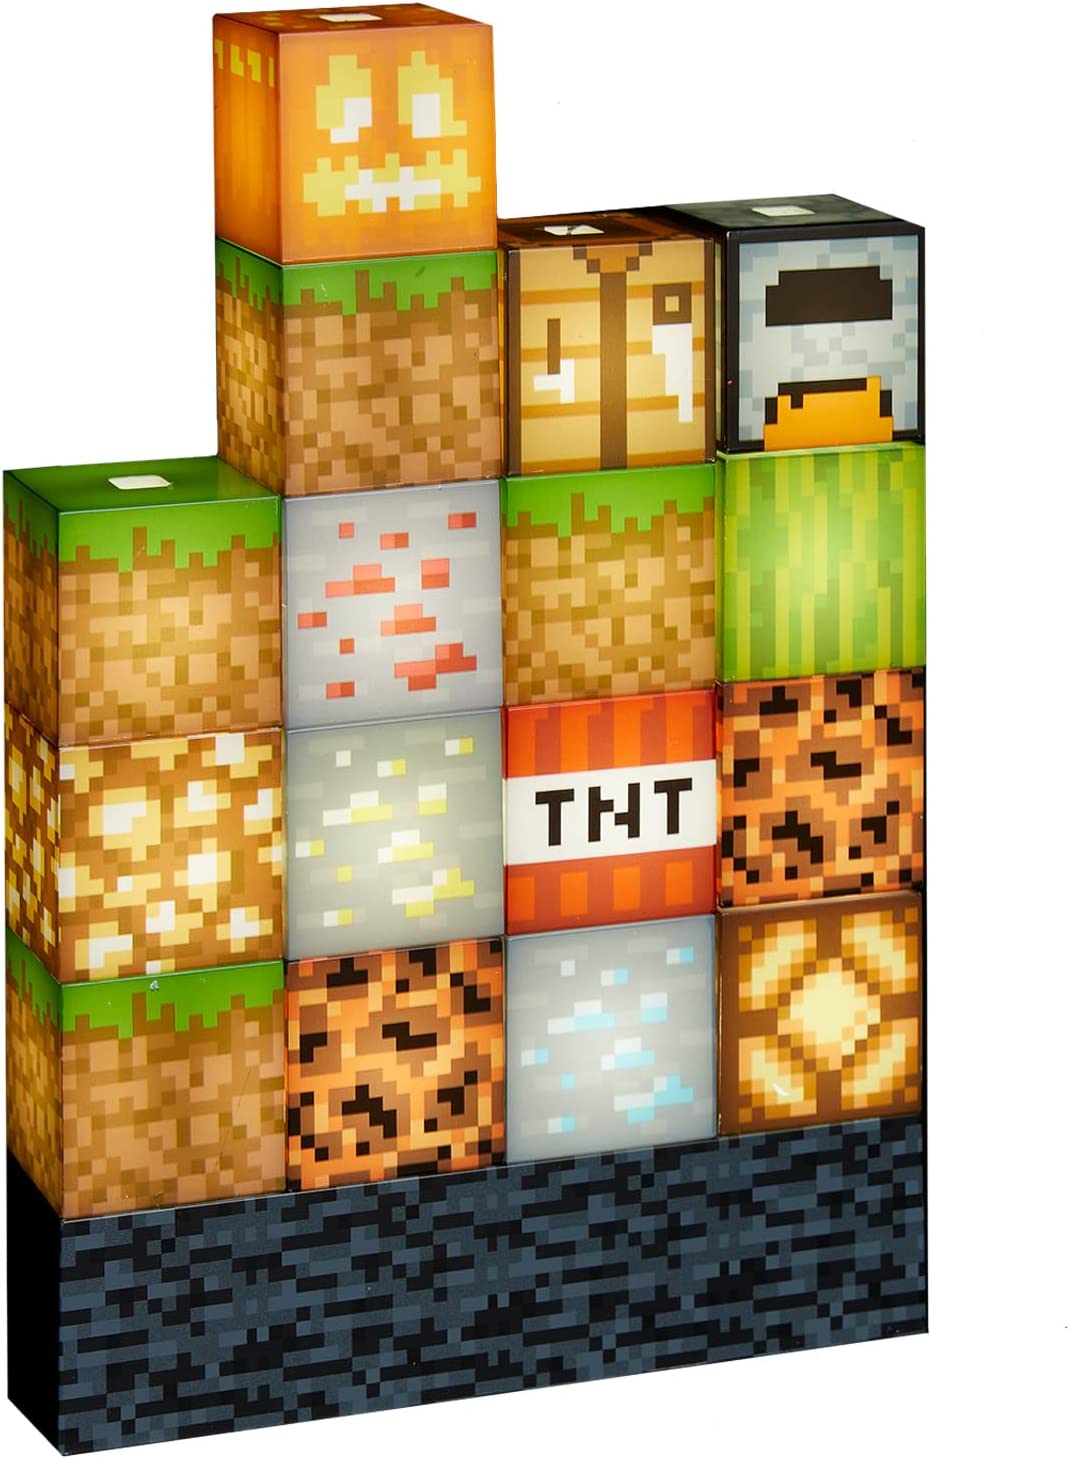 Lamp - Minecraft Block Building